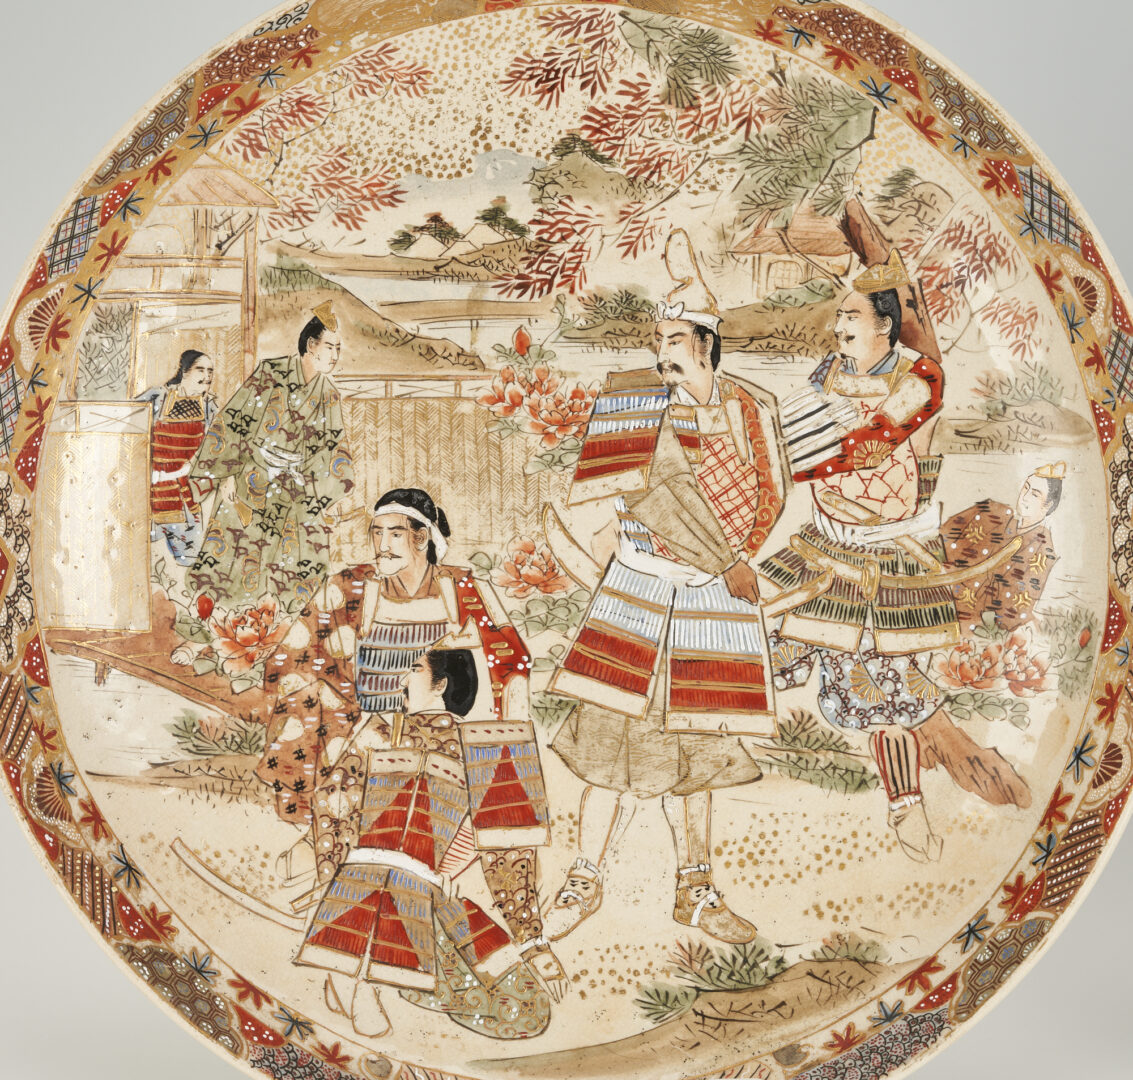 Lot 399: 4 pcs Japanese Meiji Period Satsuma Porcelain